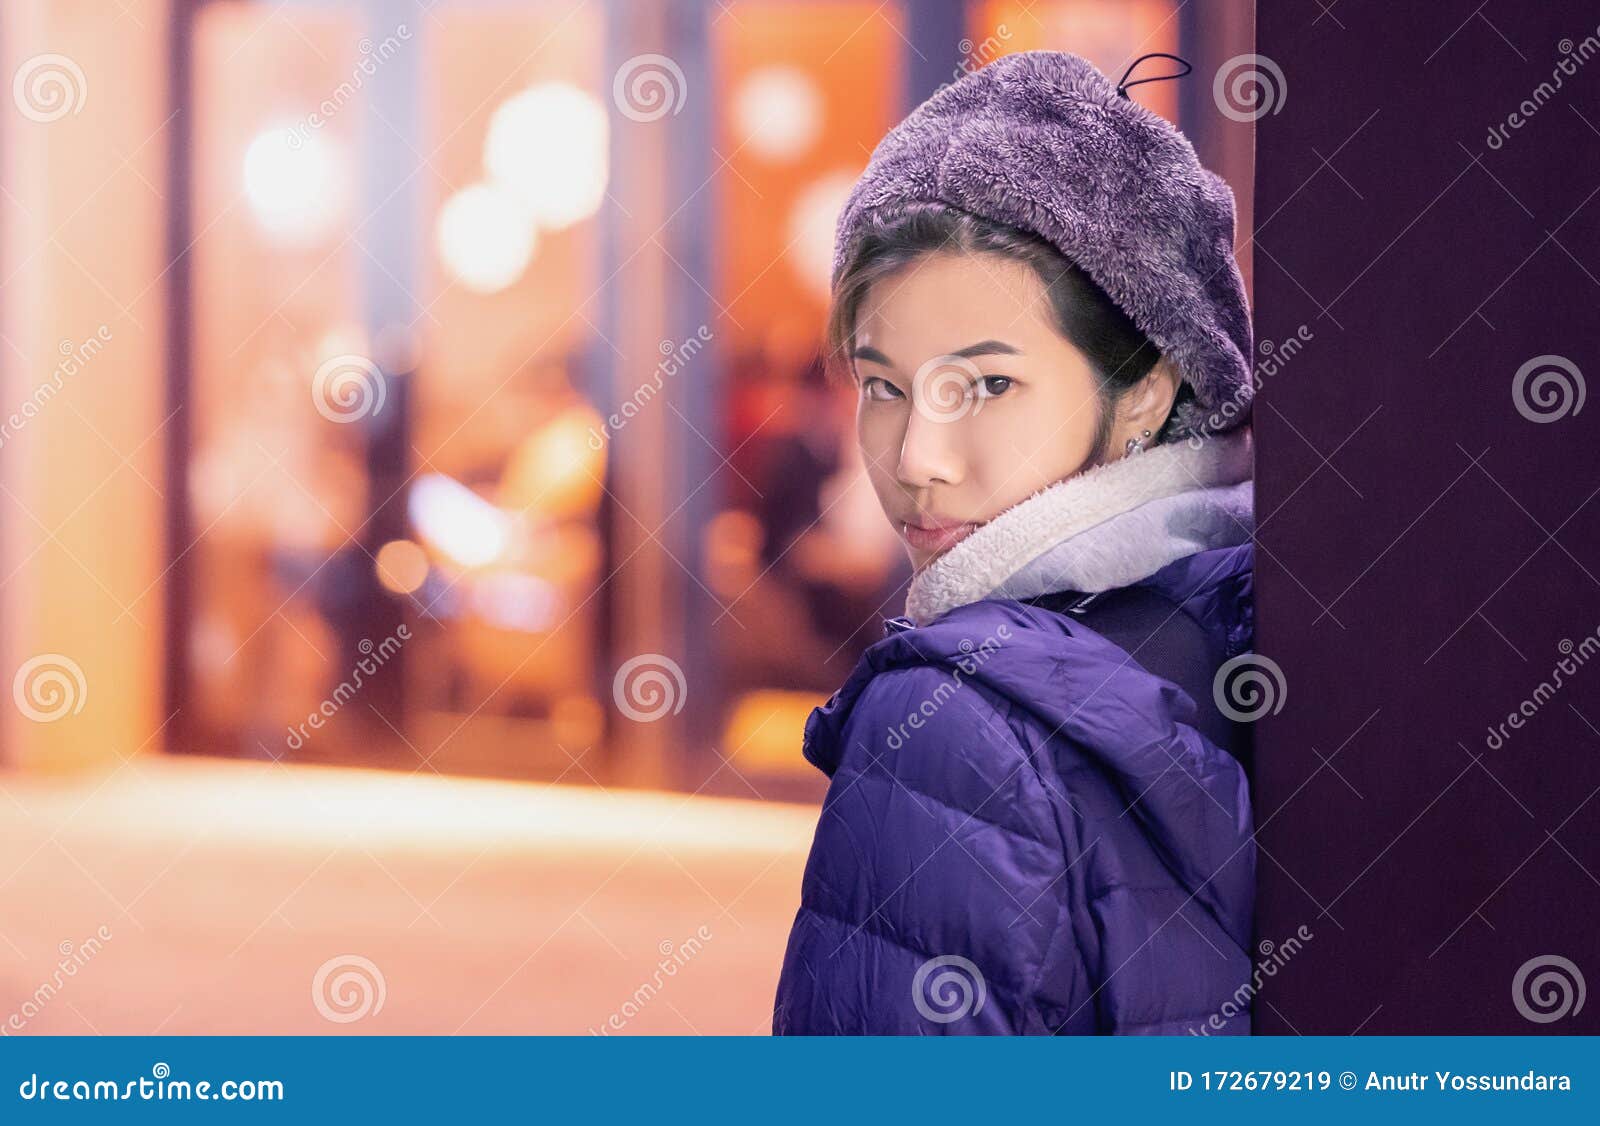 https://thumbs.dreamstime.com/z/woman-winter-fashion-beauty-skin-cosmetic-orange-toned-background-sendai-japan-172679219.jpg